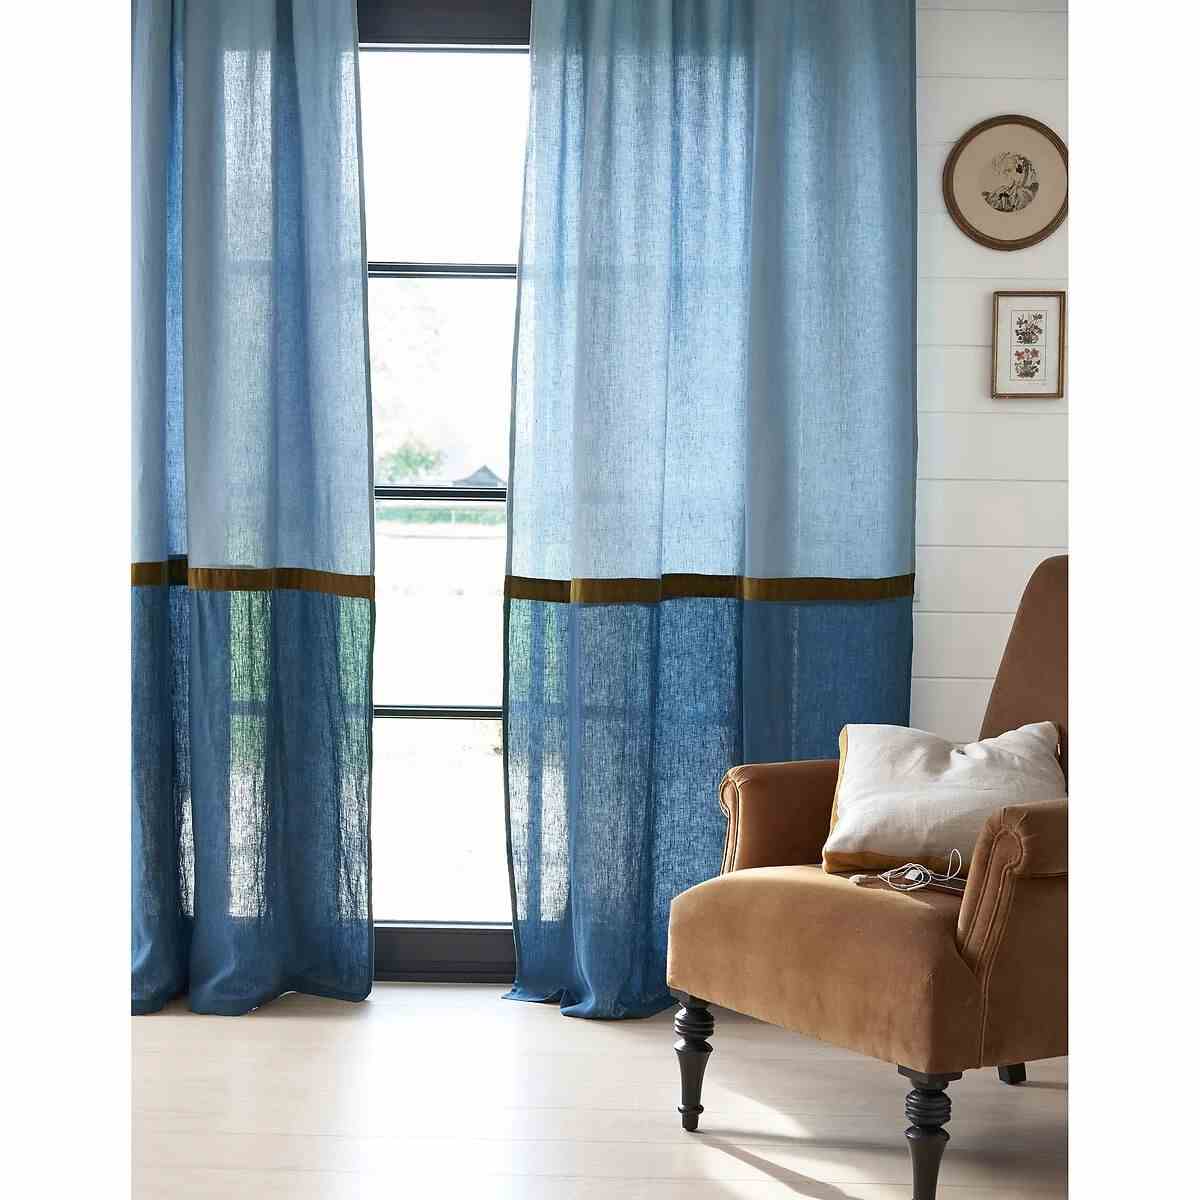 A Bi-Material Curtain In Color